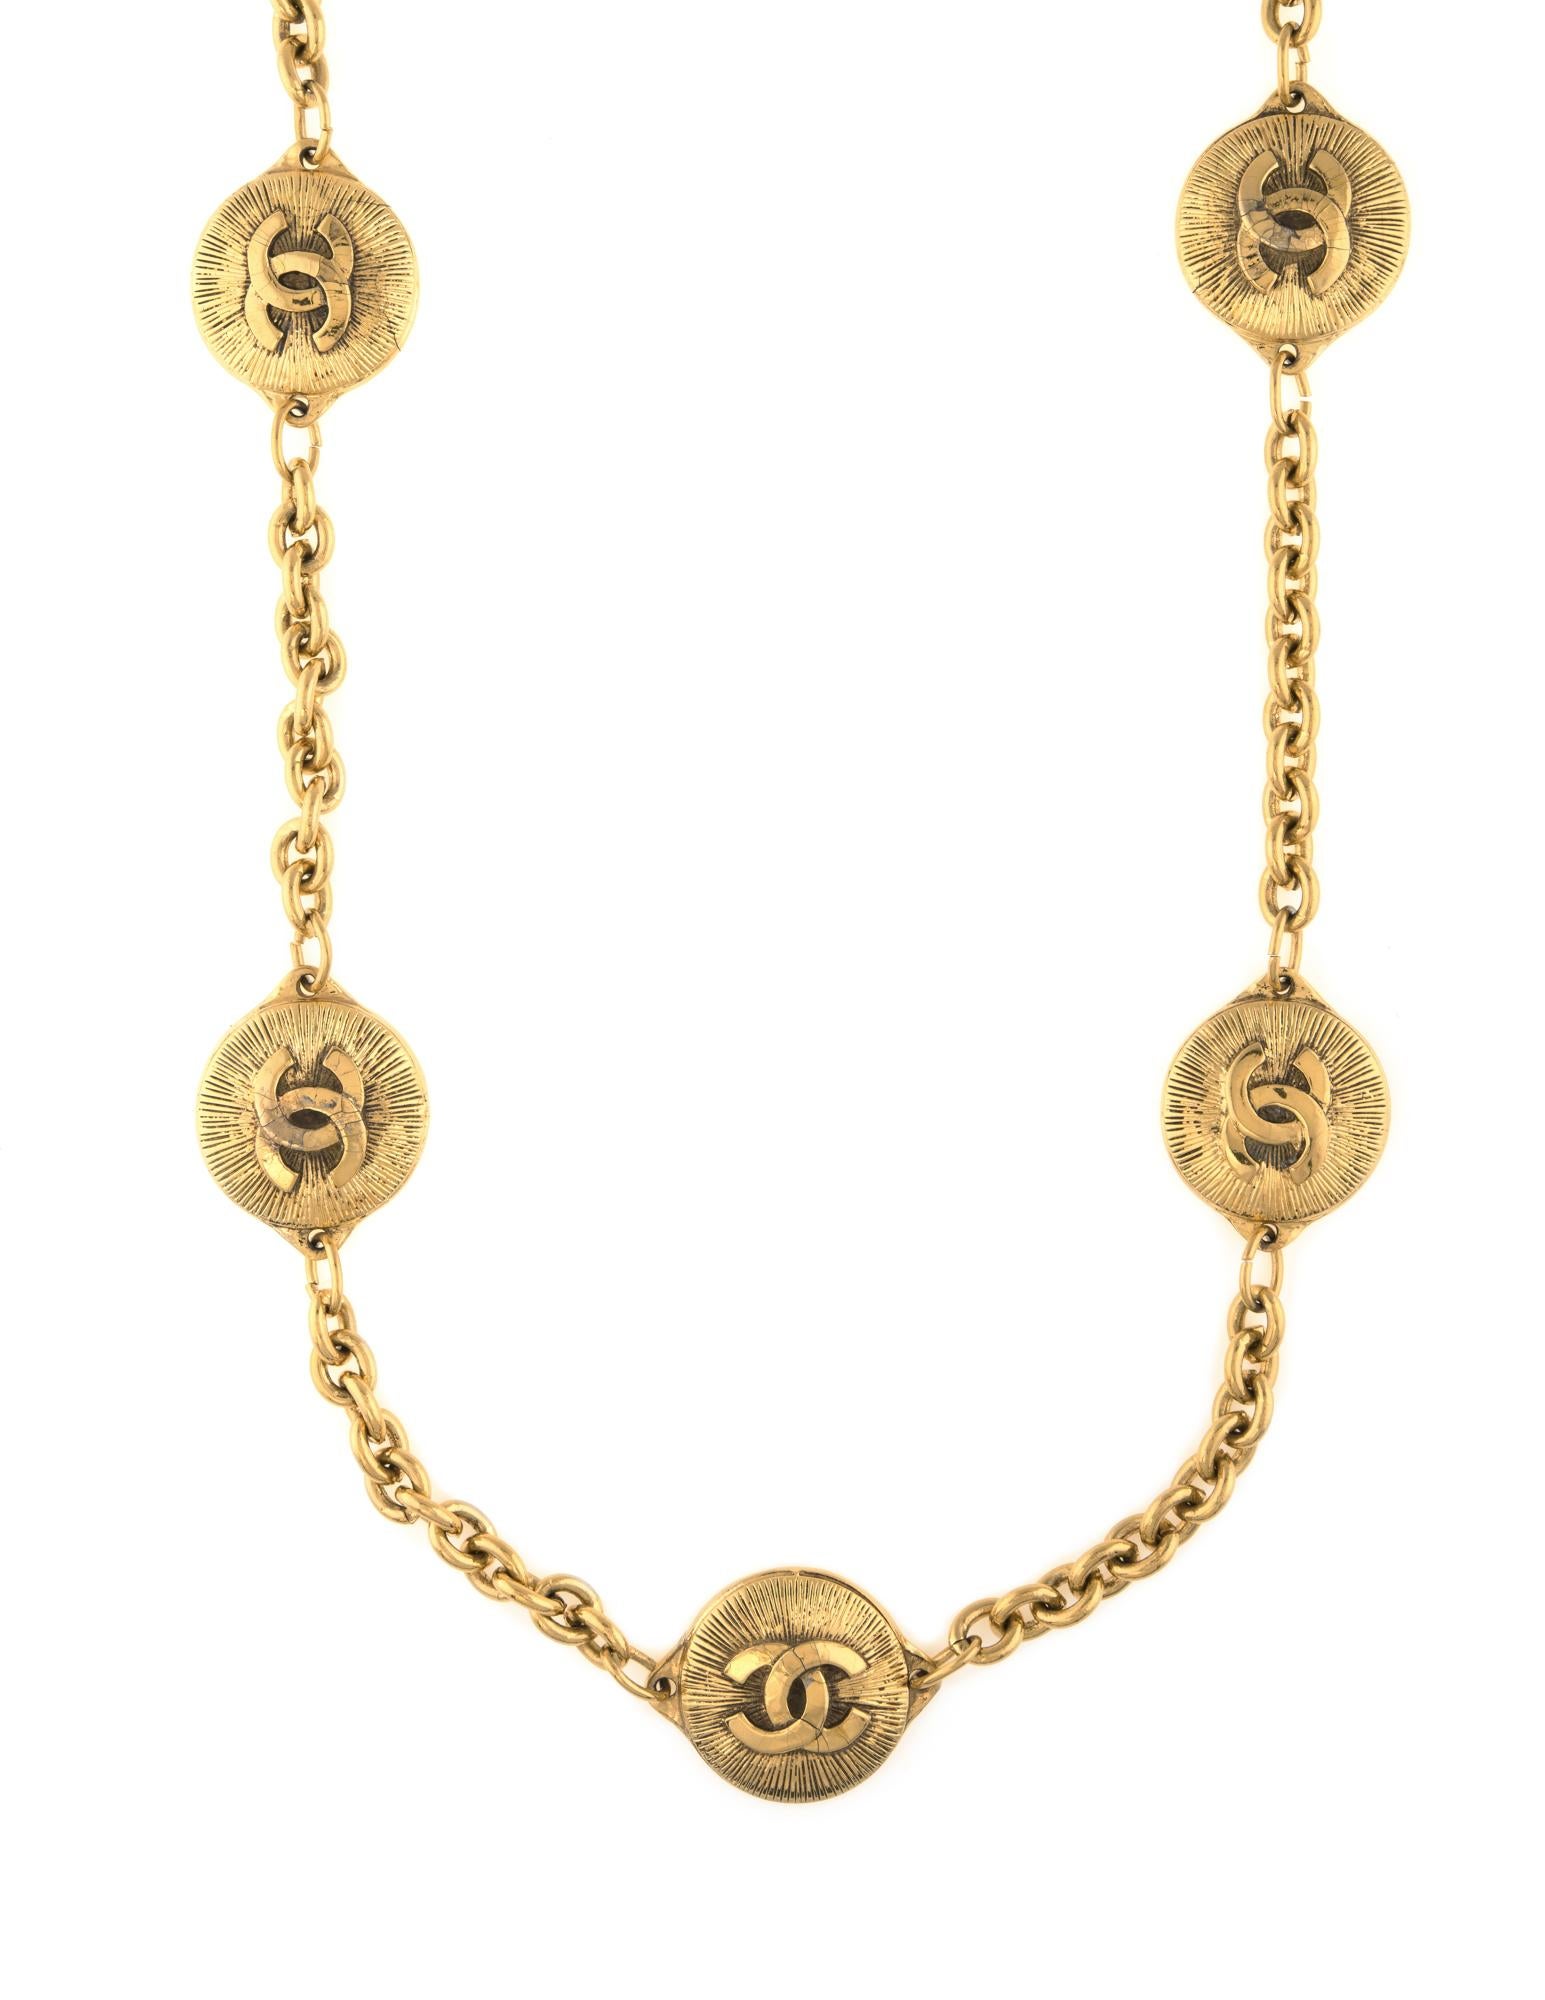 Beige Vintage Chanel Belt Buckle 1980s Chain Link CC Logo Sunburst Yellow Gold Tone 